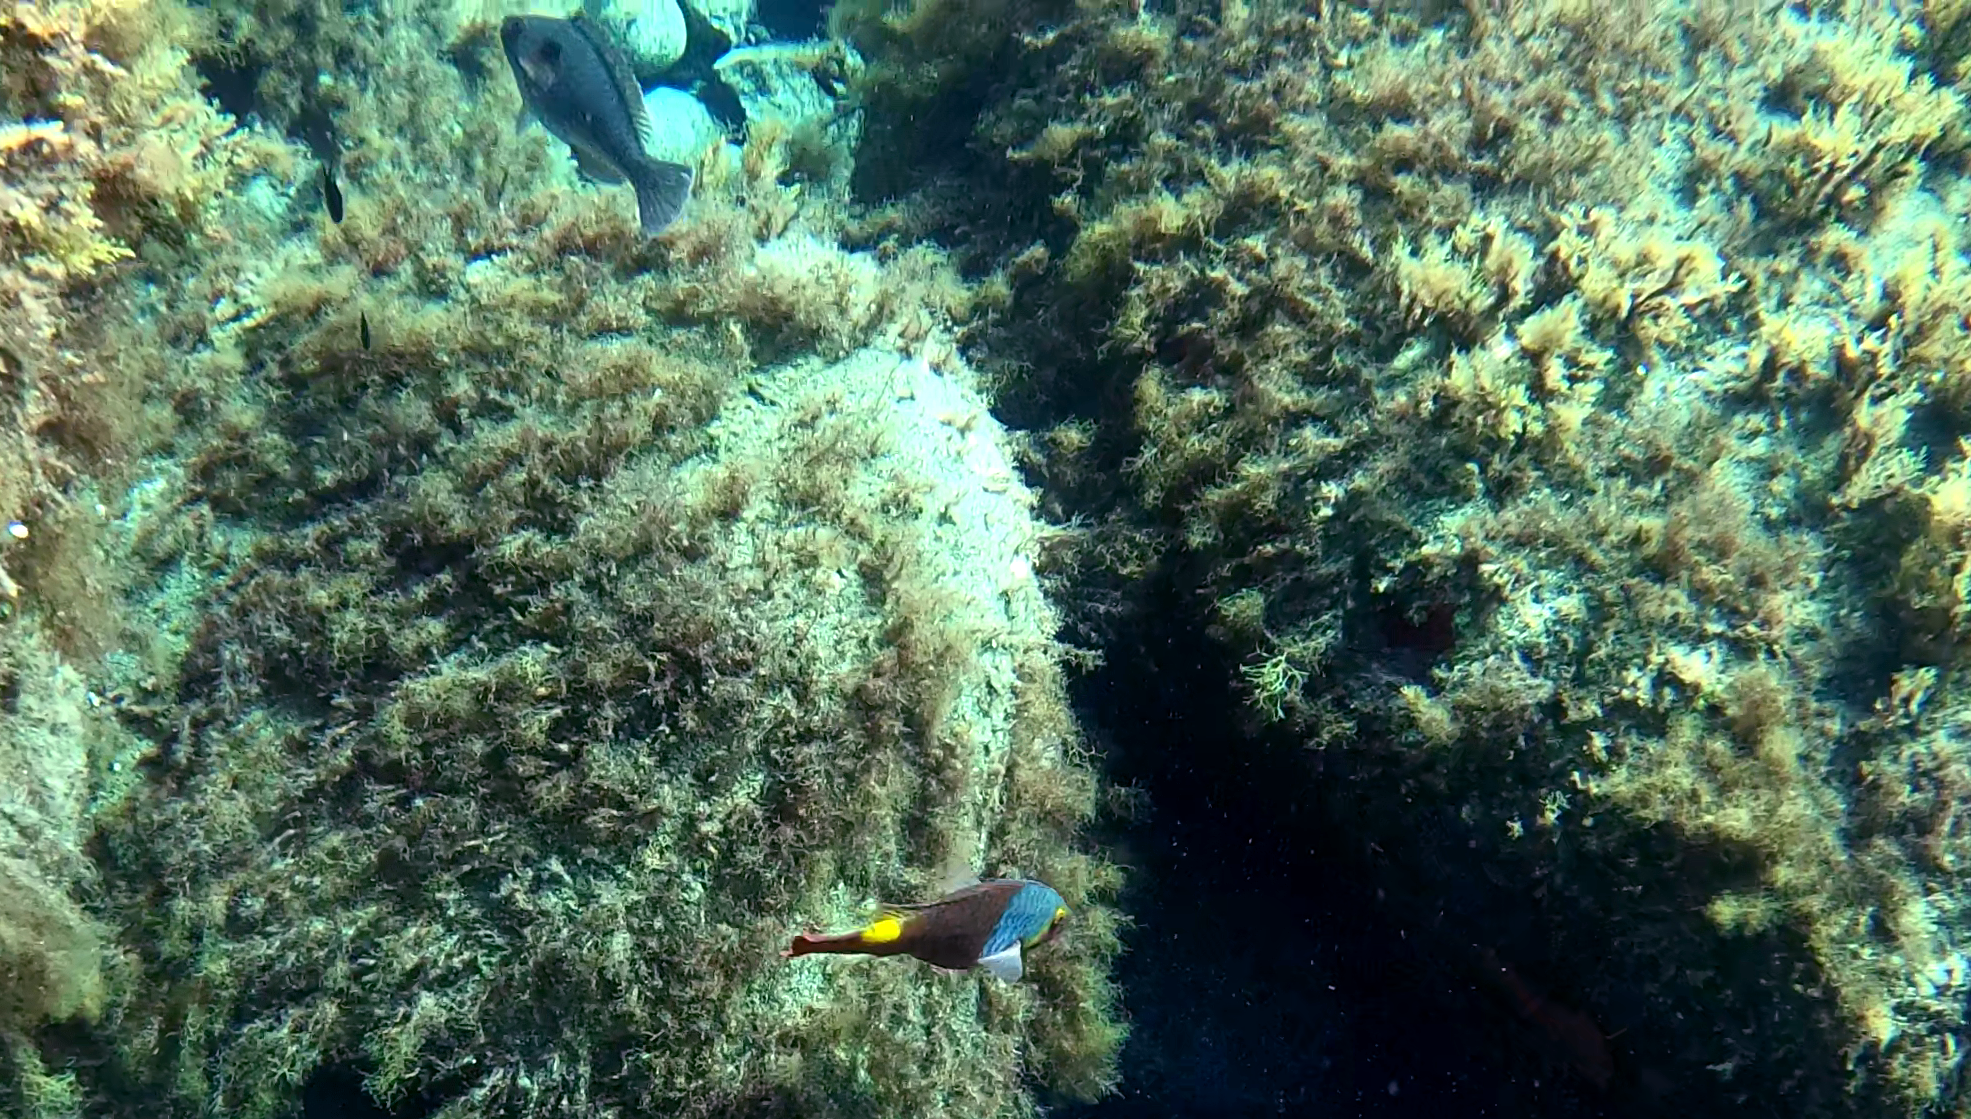 Pesce Pappagallo mediterraneo maschio e femmina - Male and female mediterranean Parrotfish - Sparisoma cretense -intotheblue.it